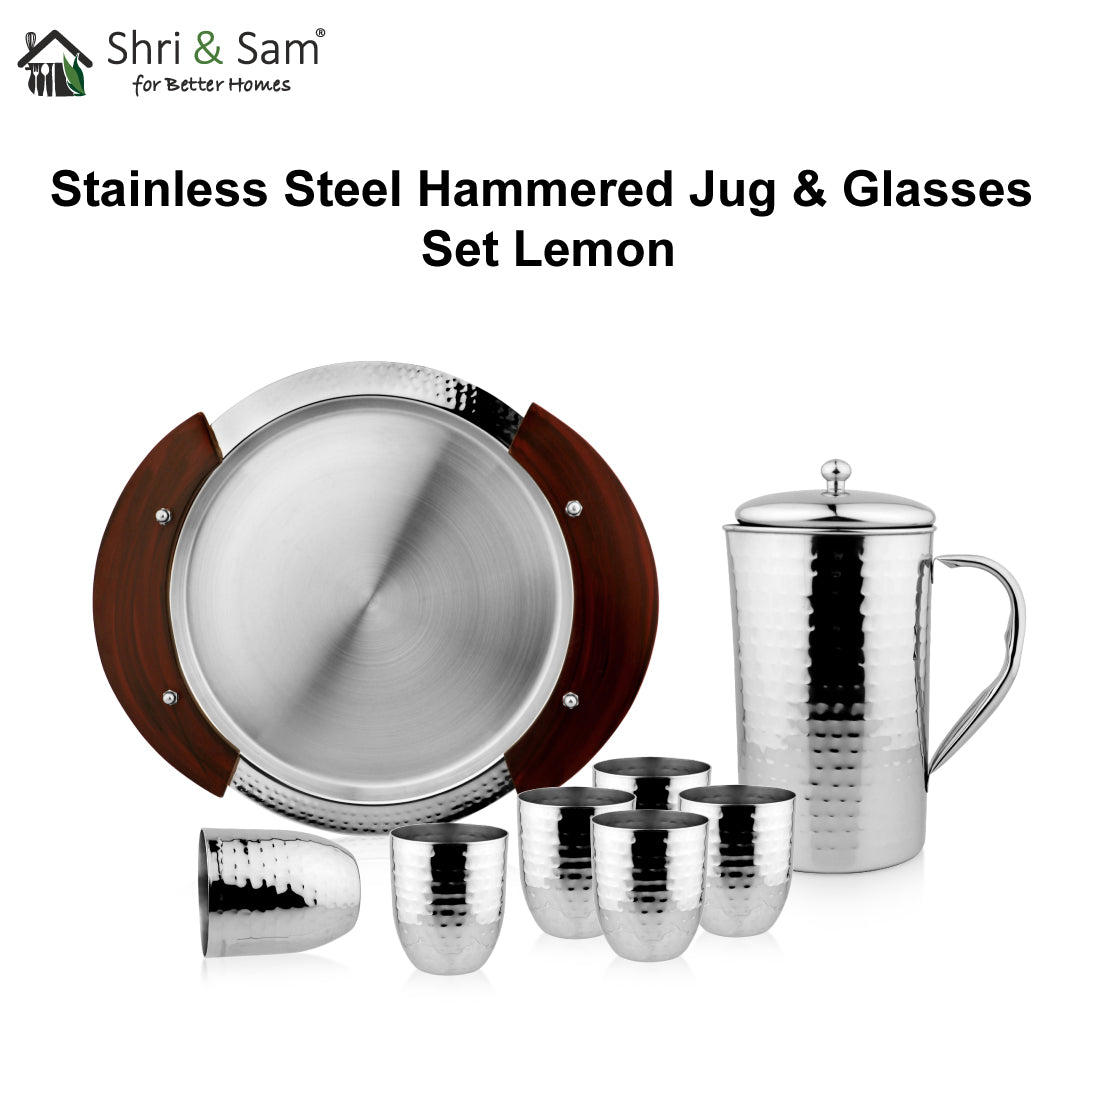 Stainless Steel Hammered Jug & Glasses Set Lemon